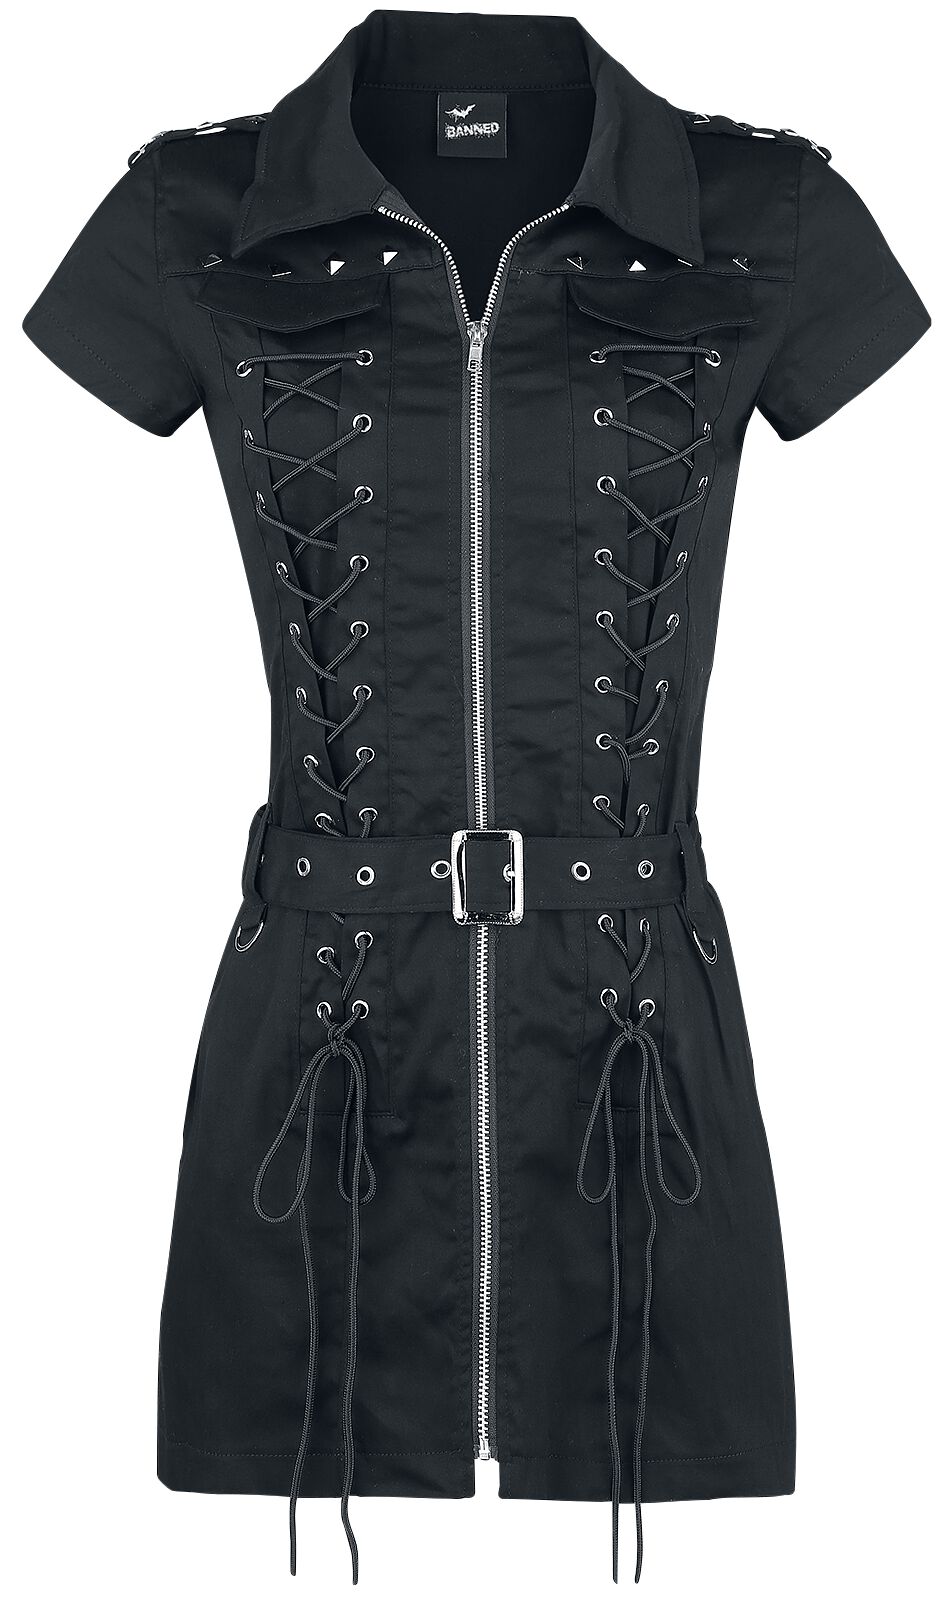 Banned Alternative Mod Dress Kurzes Kleid schwarz in L